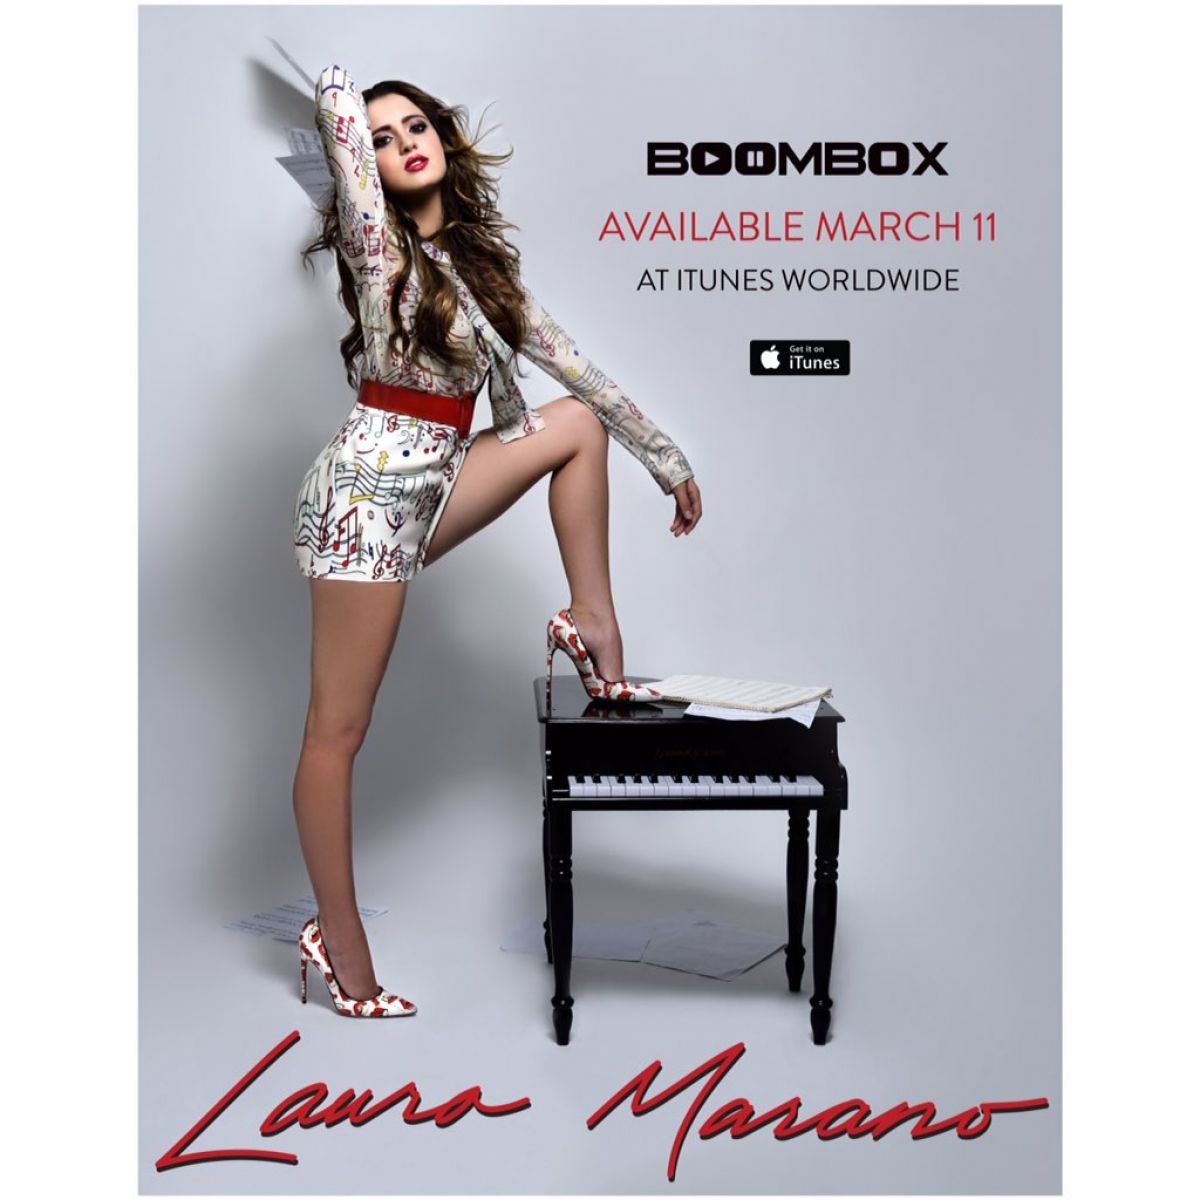 LAURA MARANO - Boombox Single Cover.